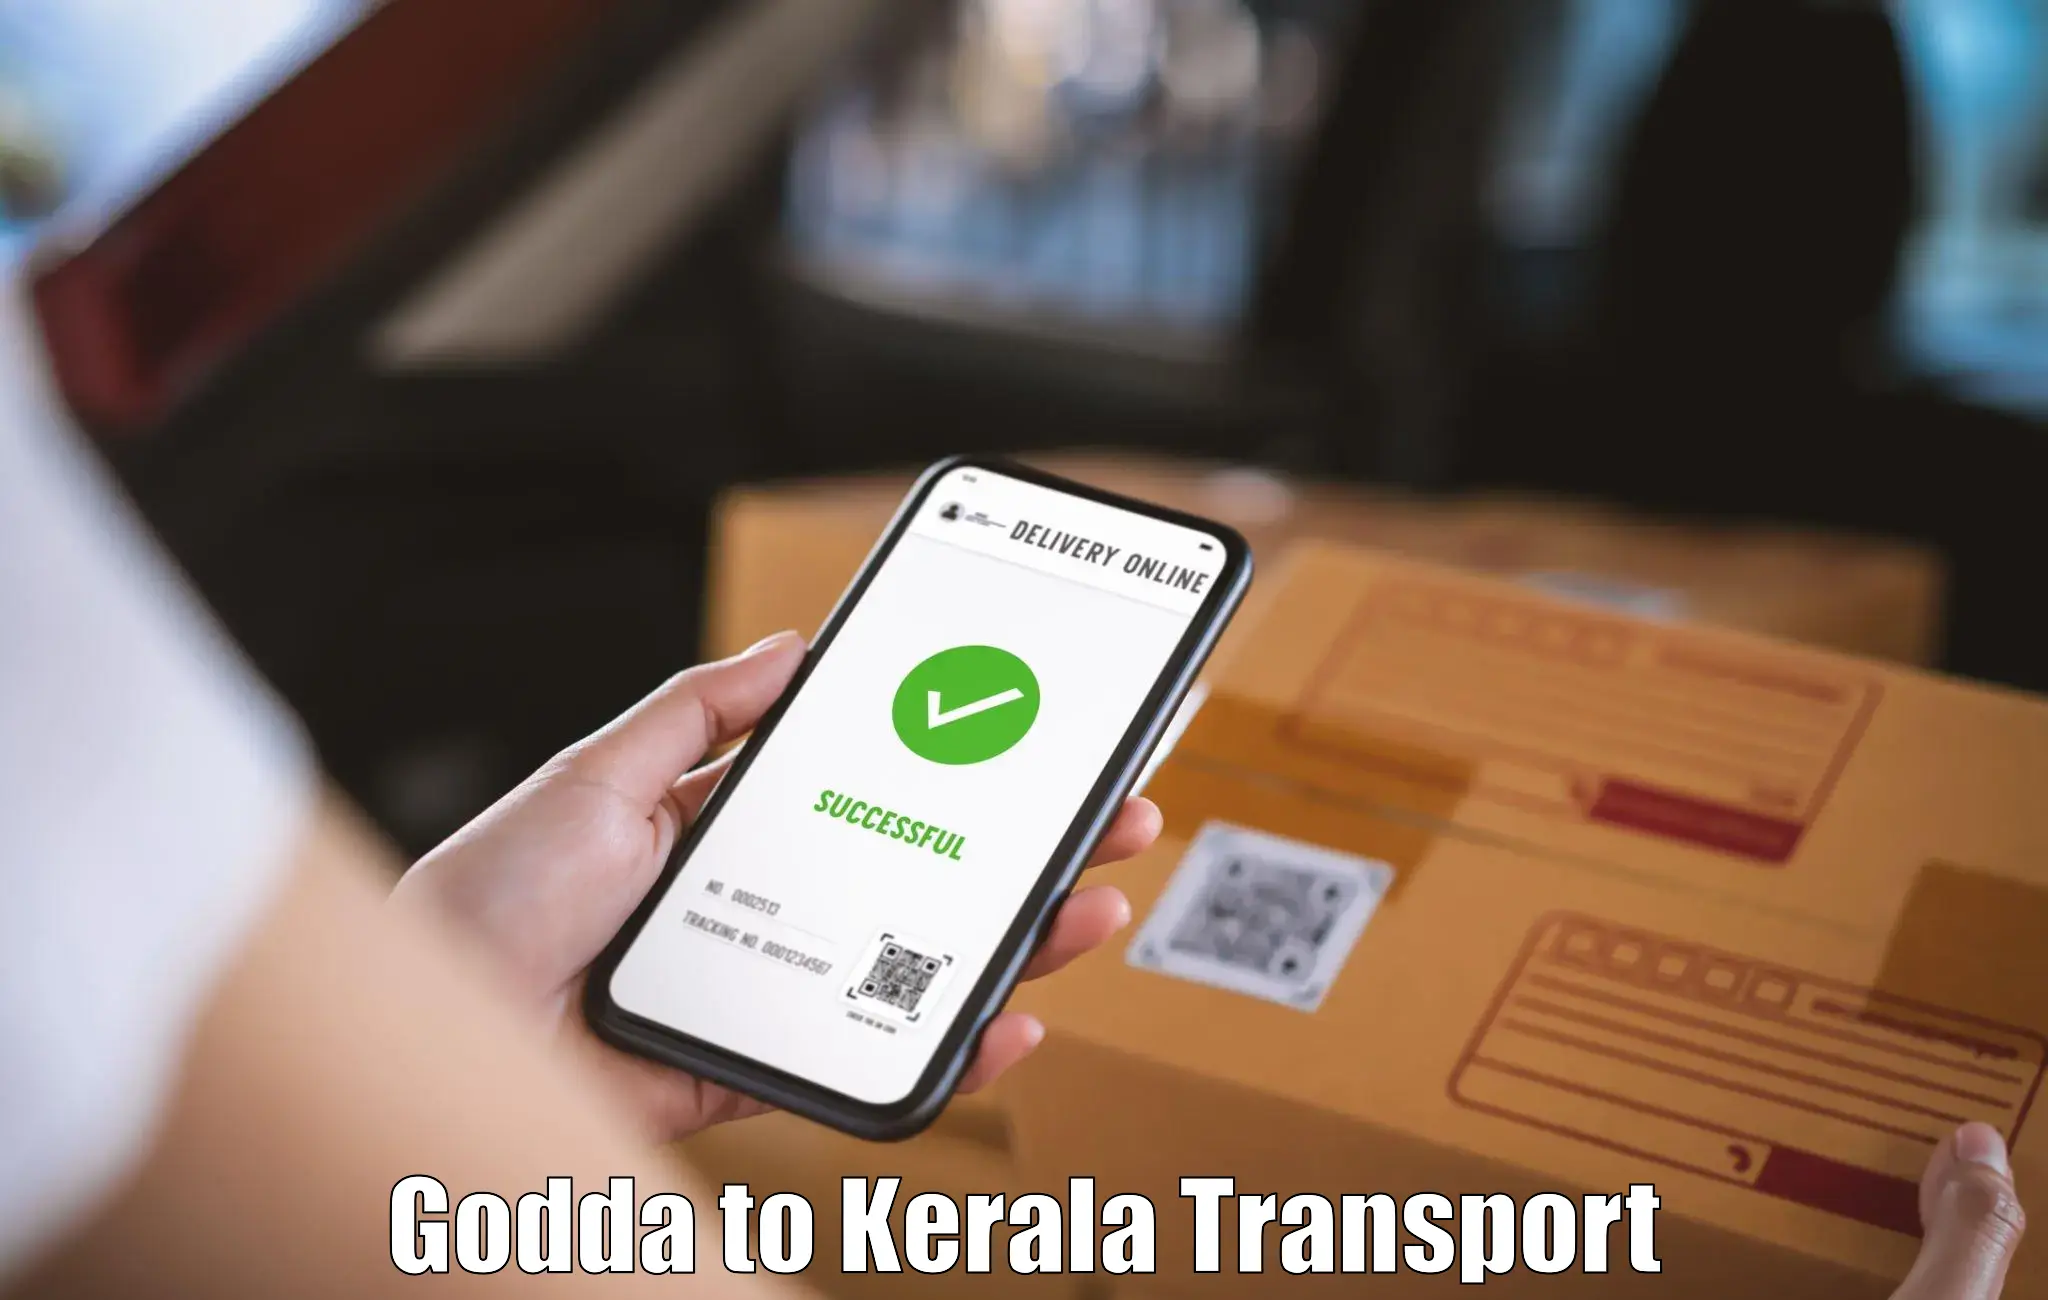 Transportation services Godda to Manjeshwar